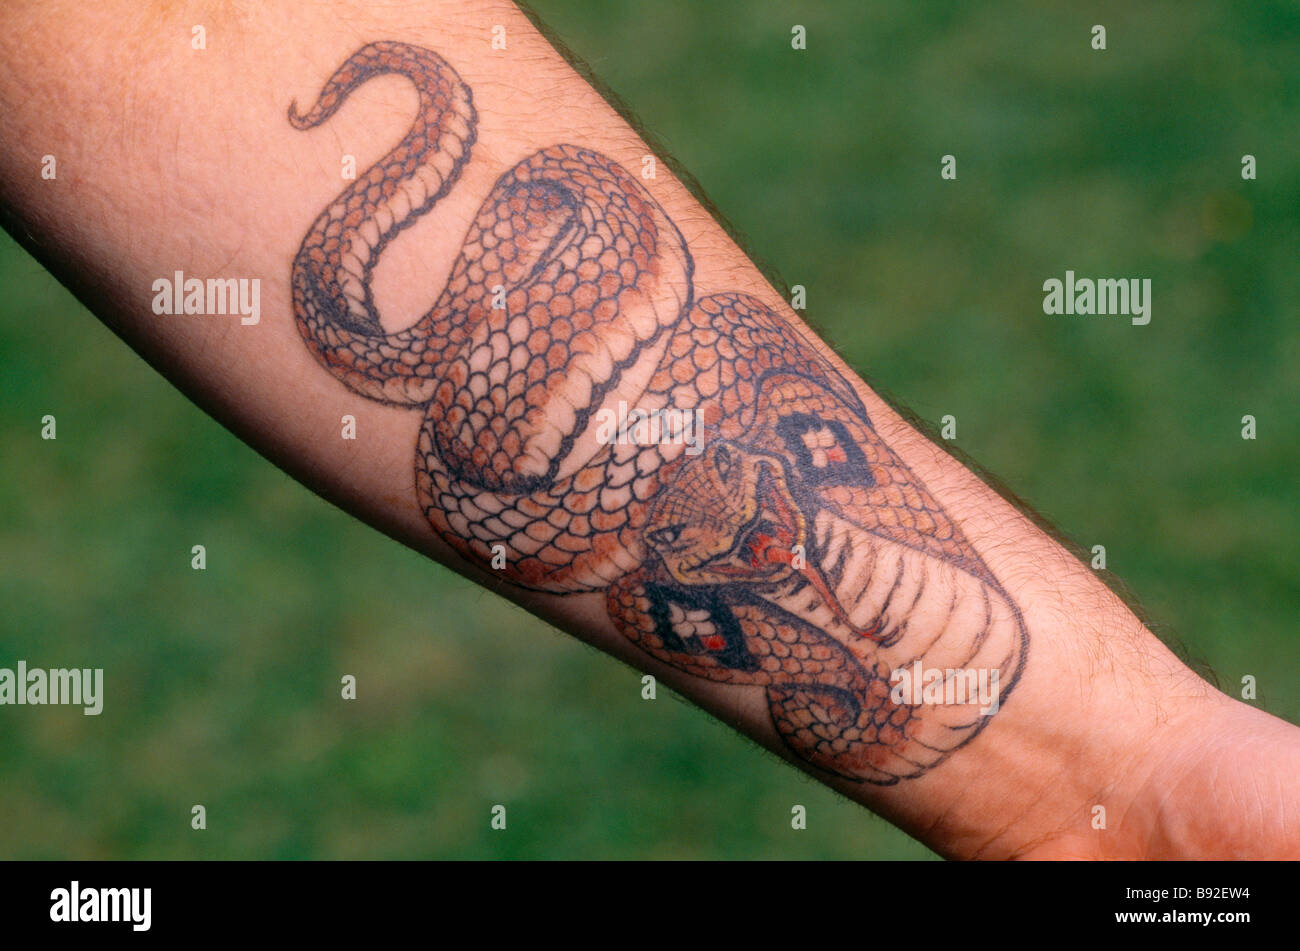 man with tattoo on arm snake B92EW4